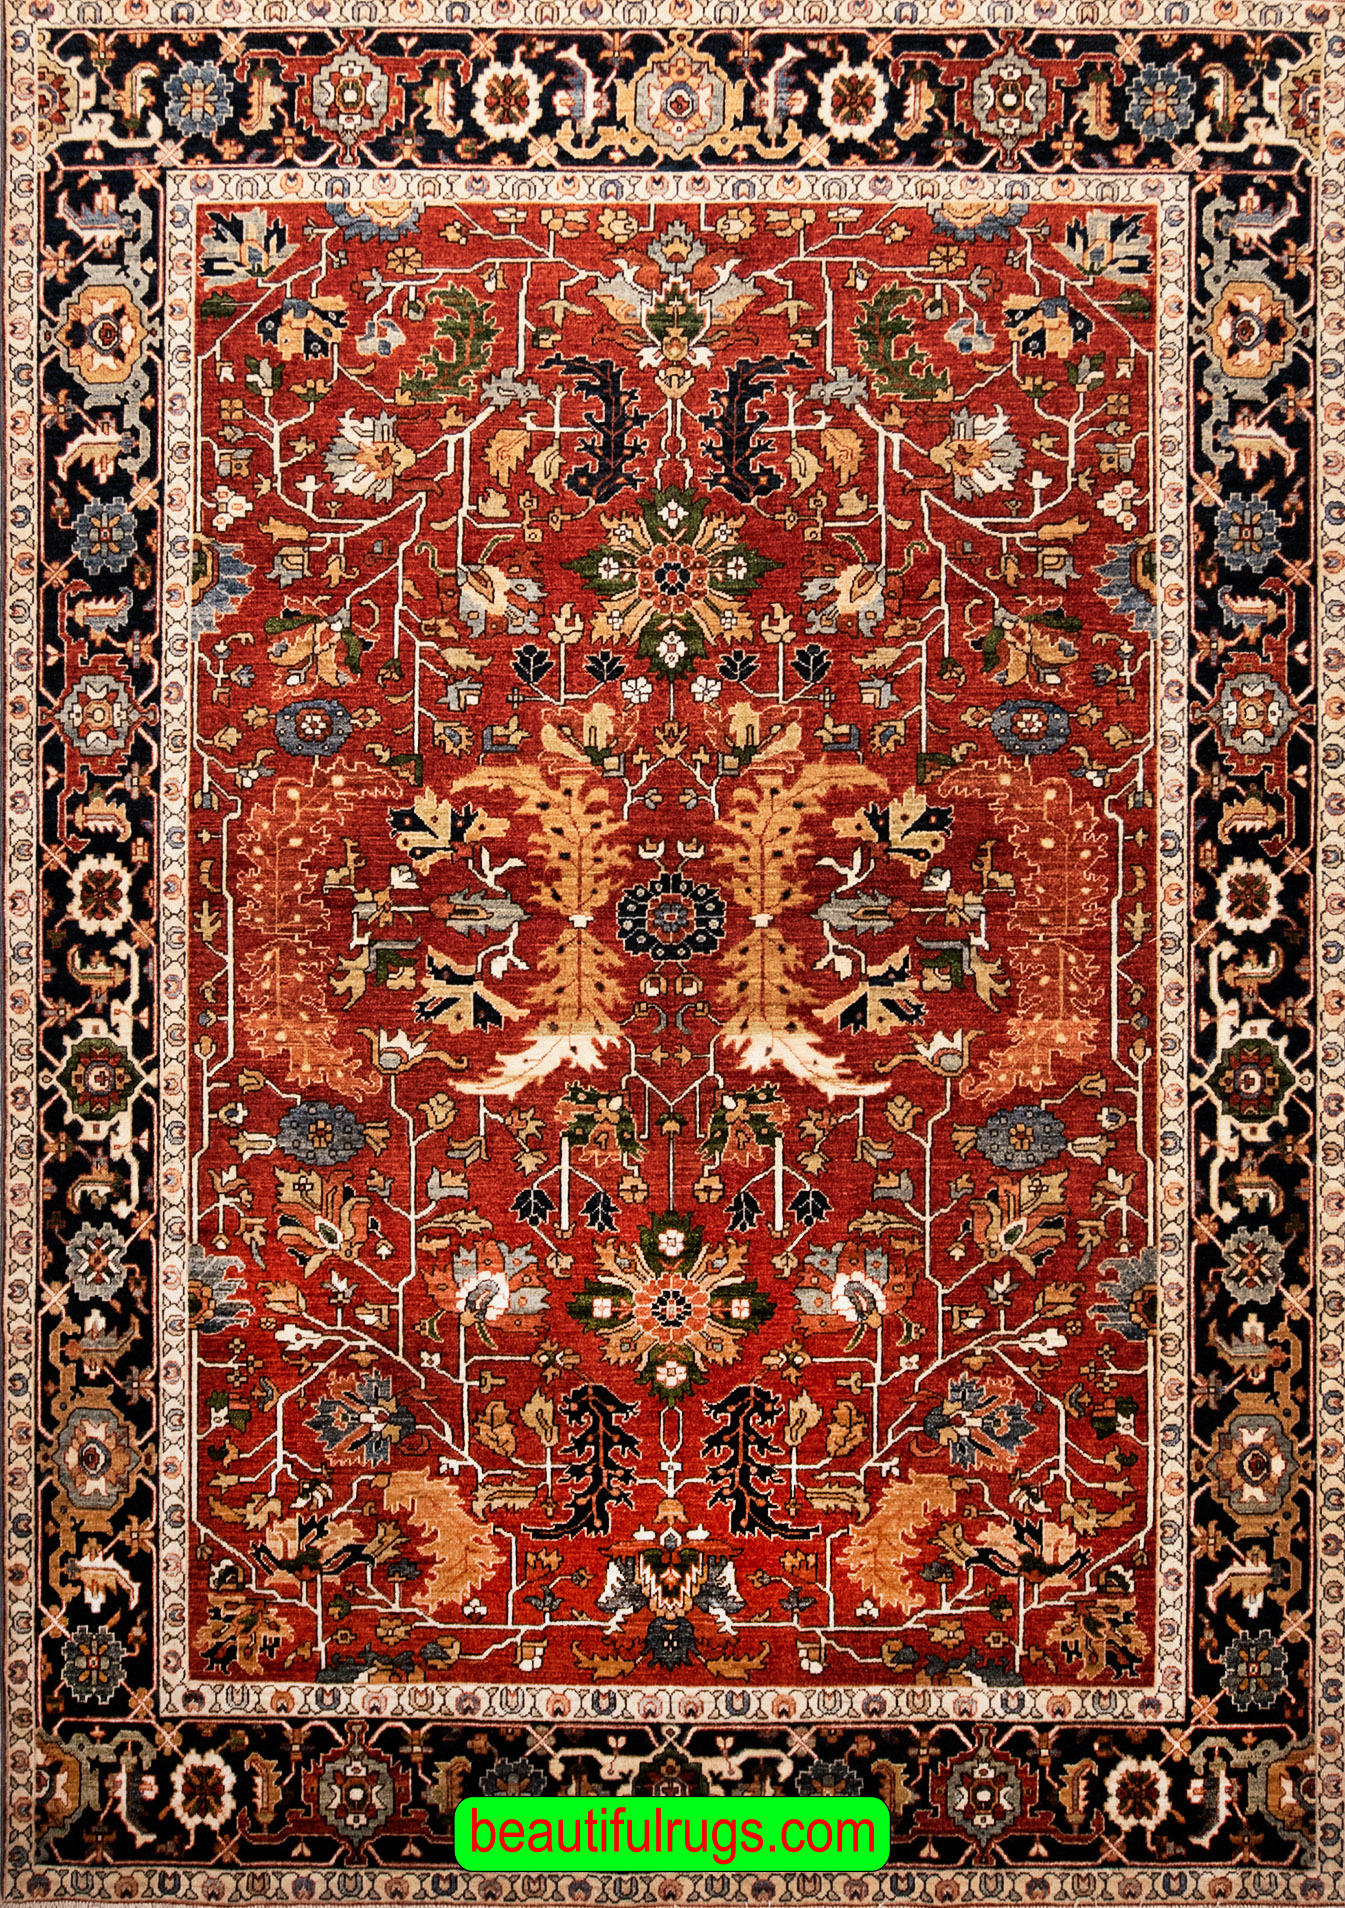 Geometriz Serapi design rug with orange color. Size 8.1x9.10